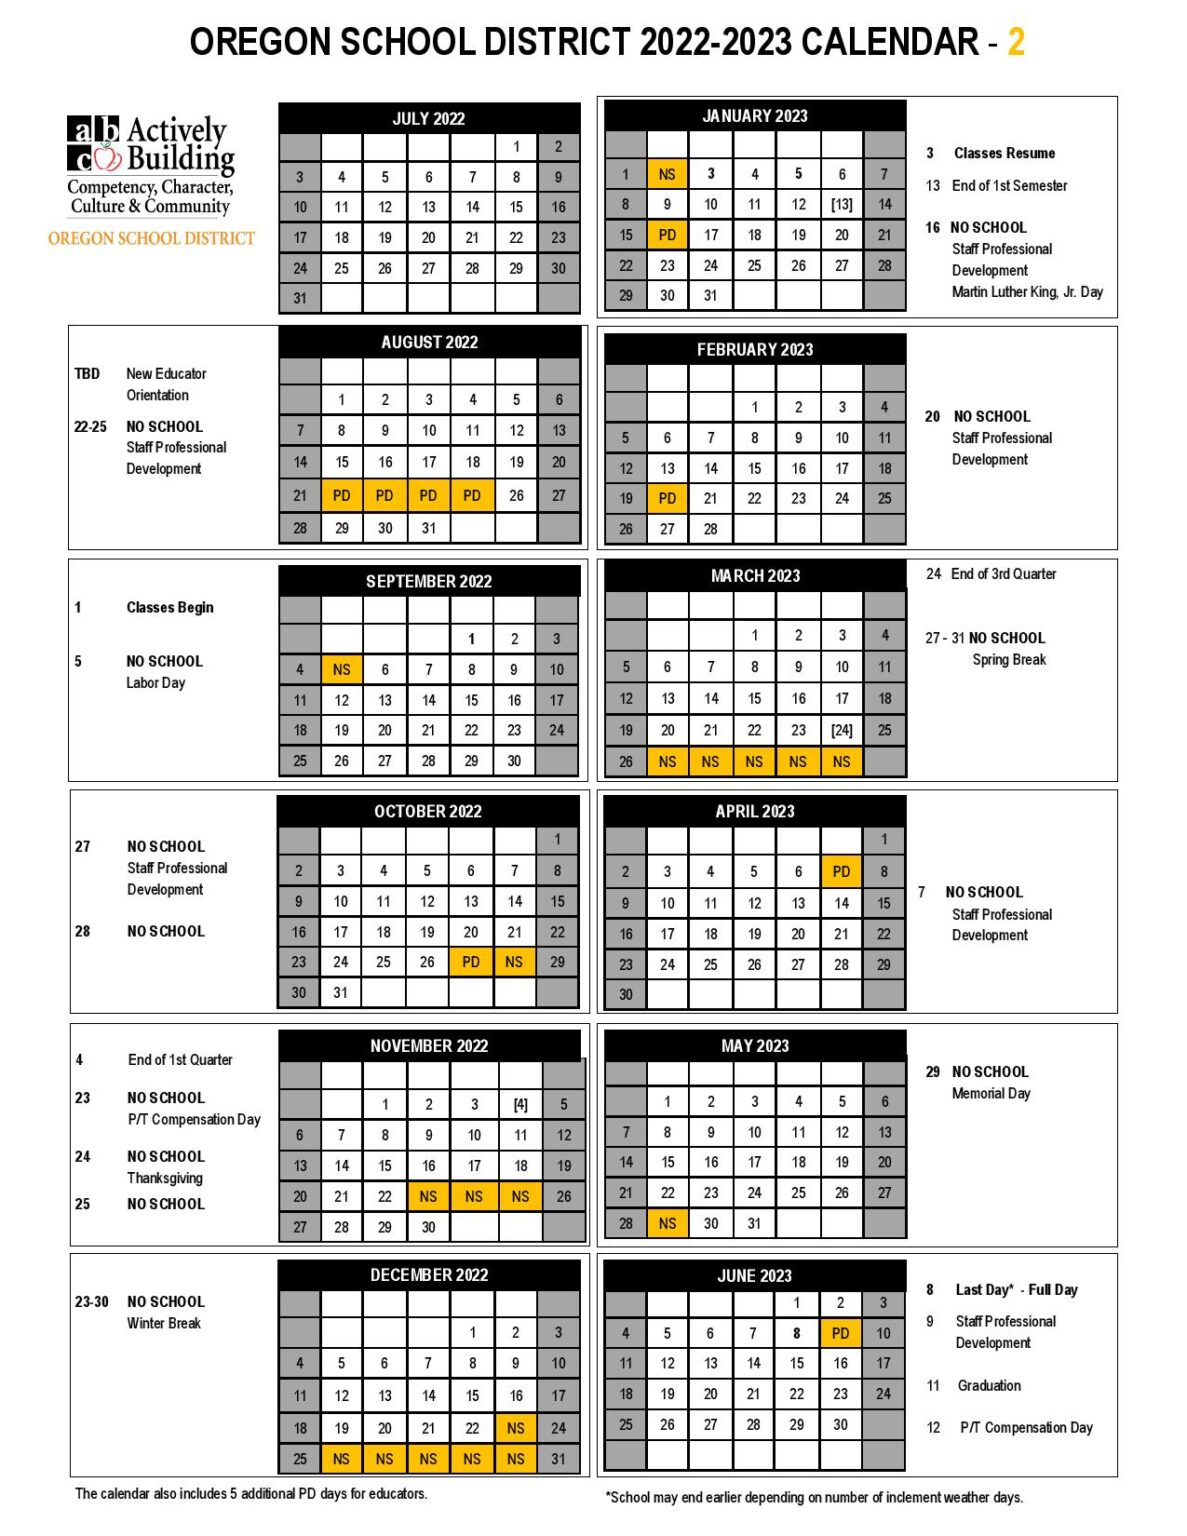 Oregon School District Calendar Holidays 2022-2023 - School Calendar Info